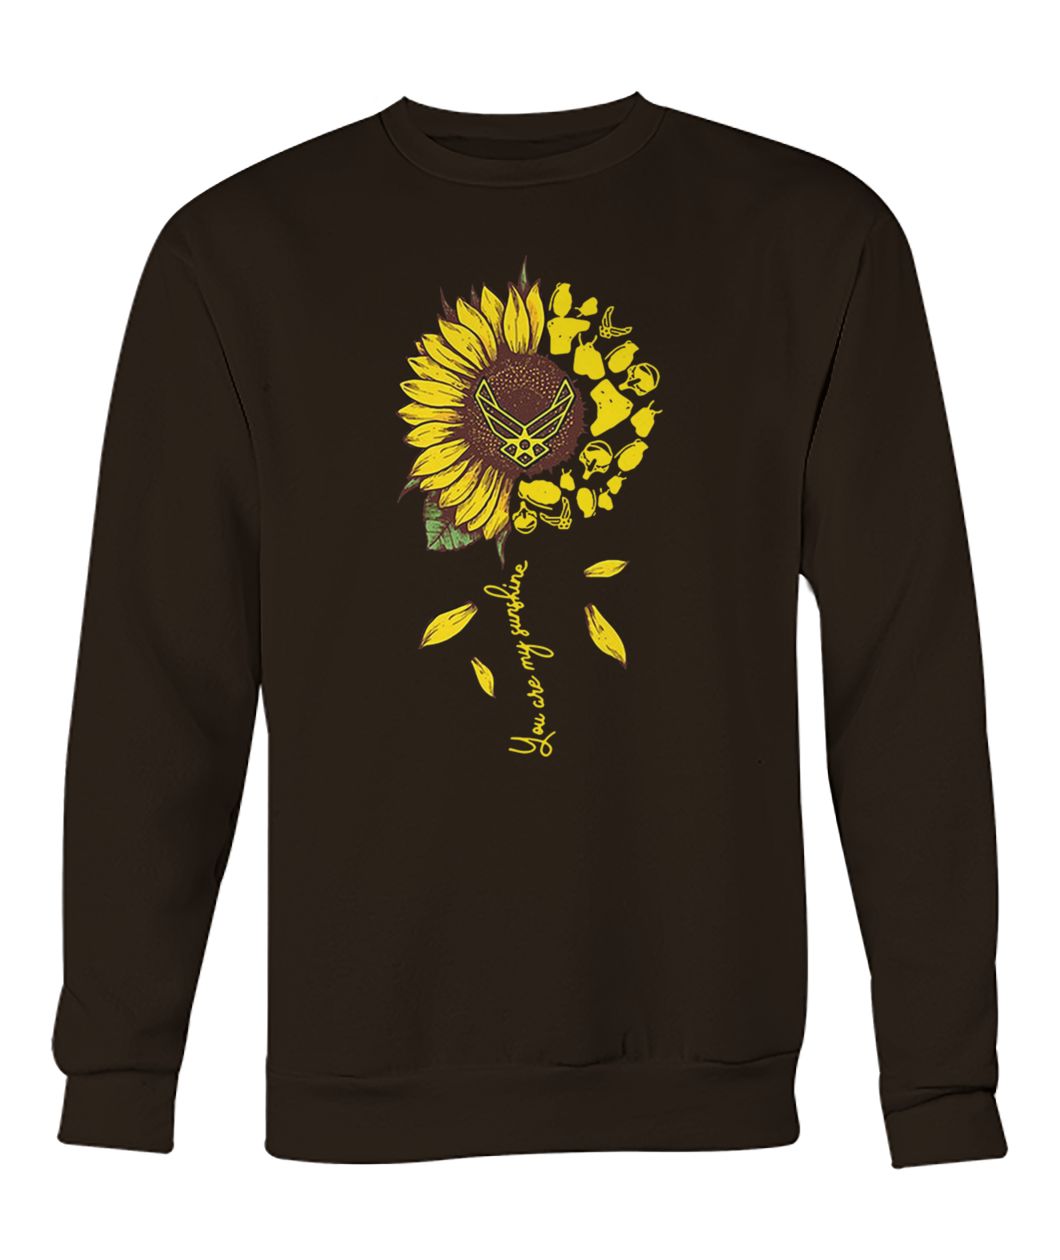 Sunflower you are my sunshine US air force crew neck sweatshirt